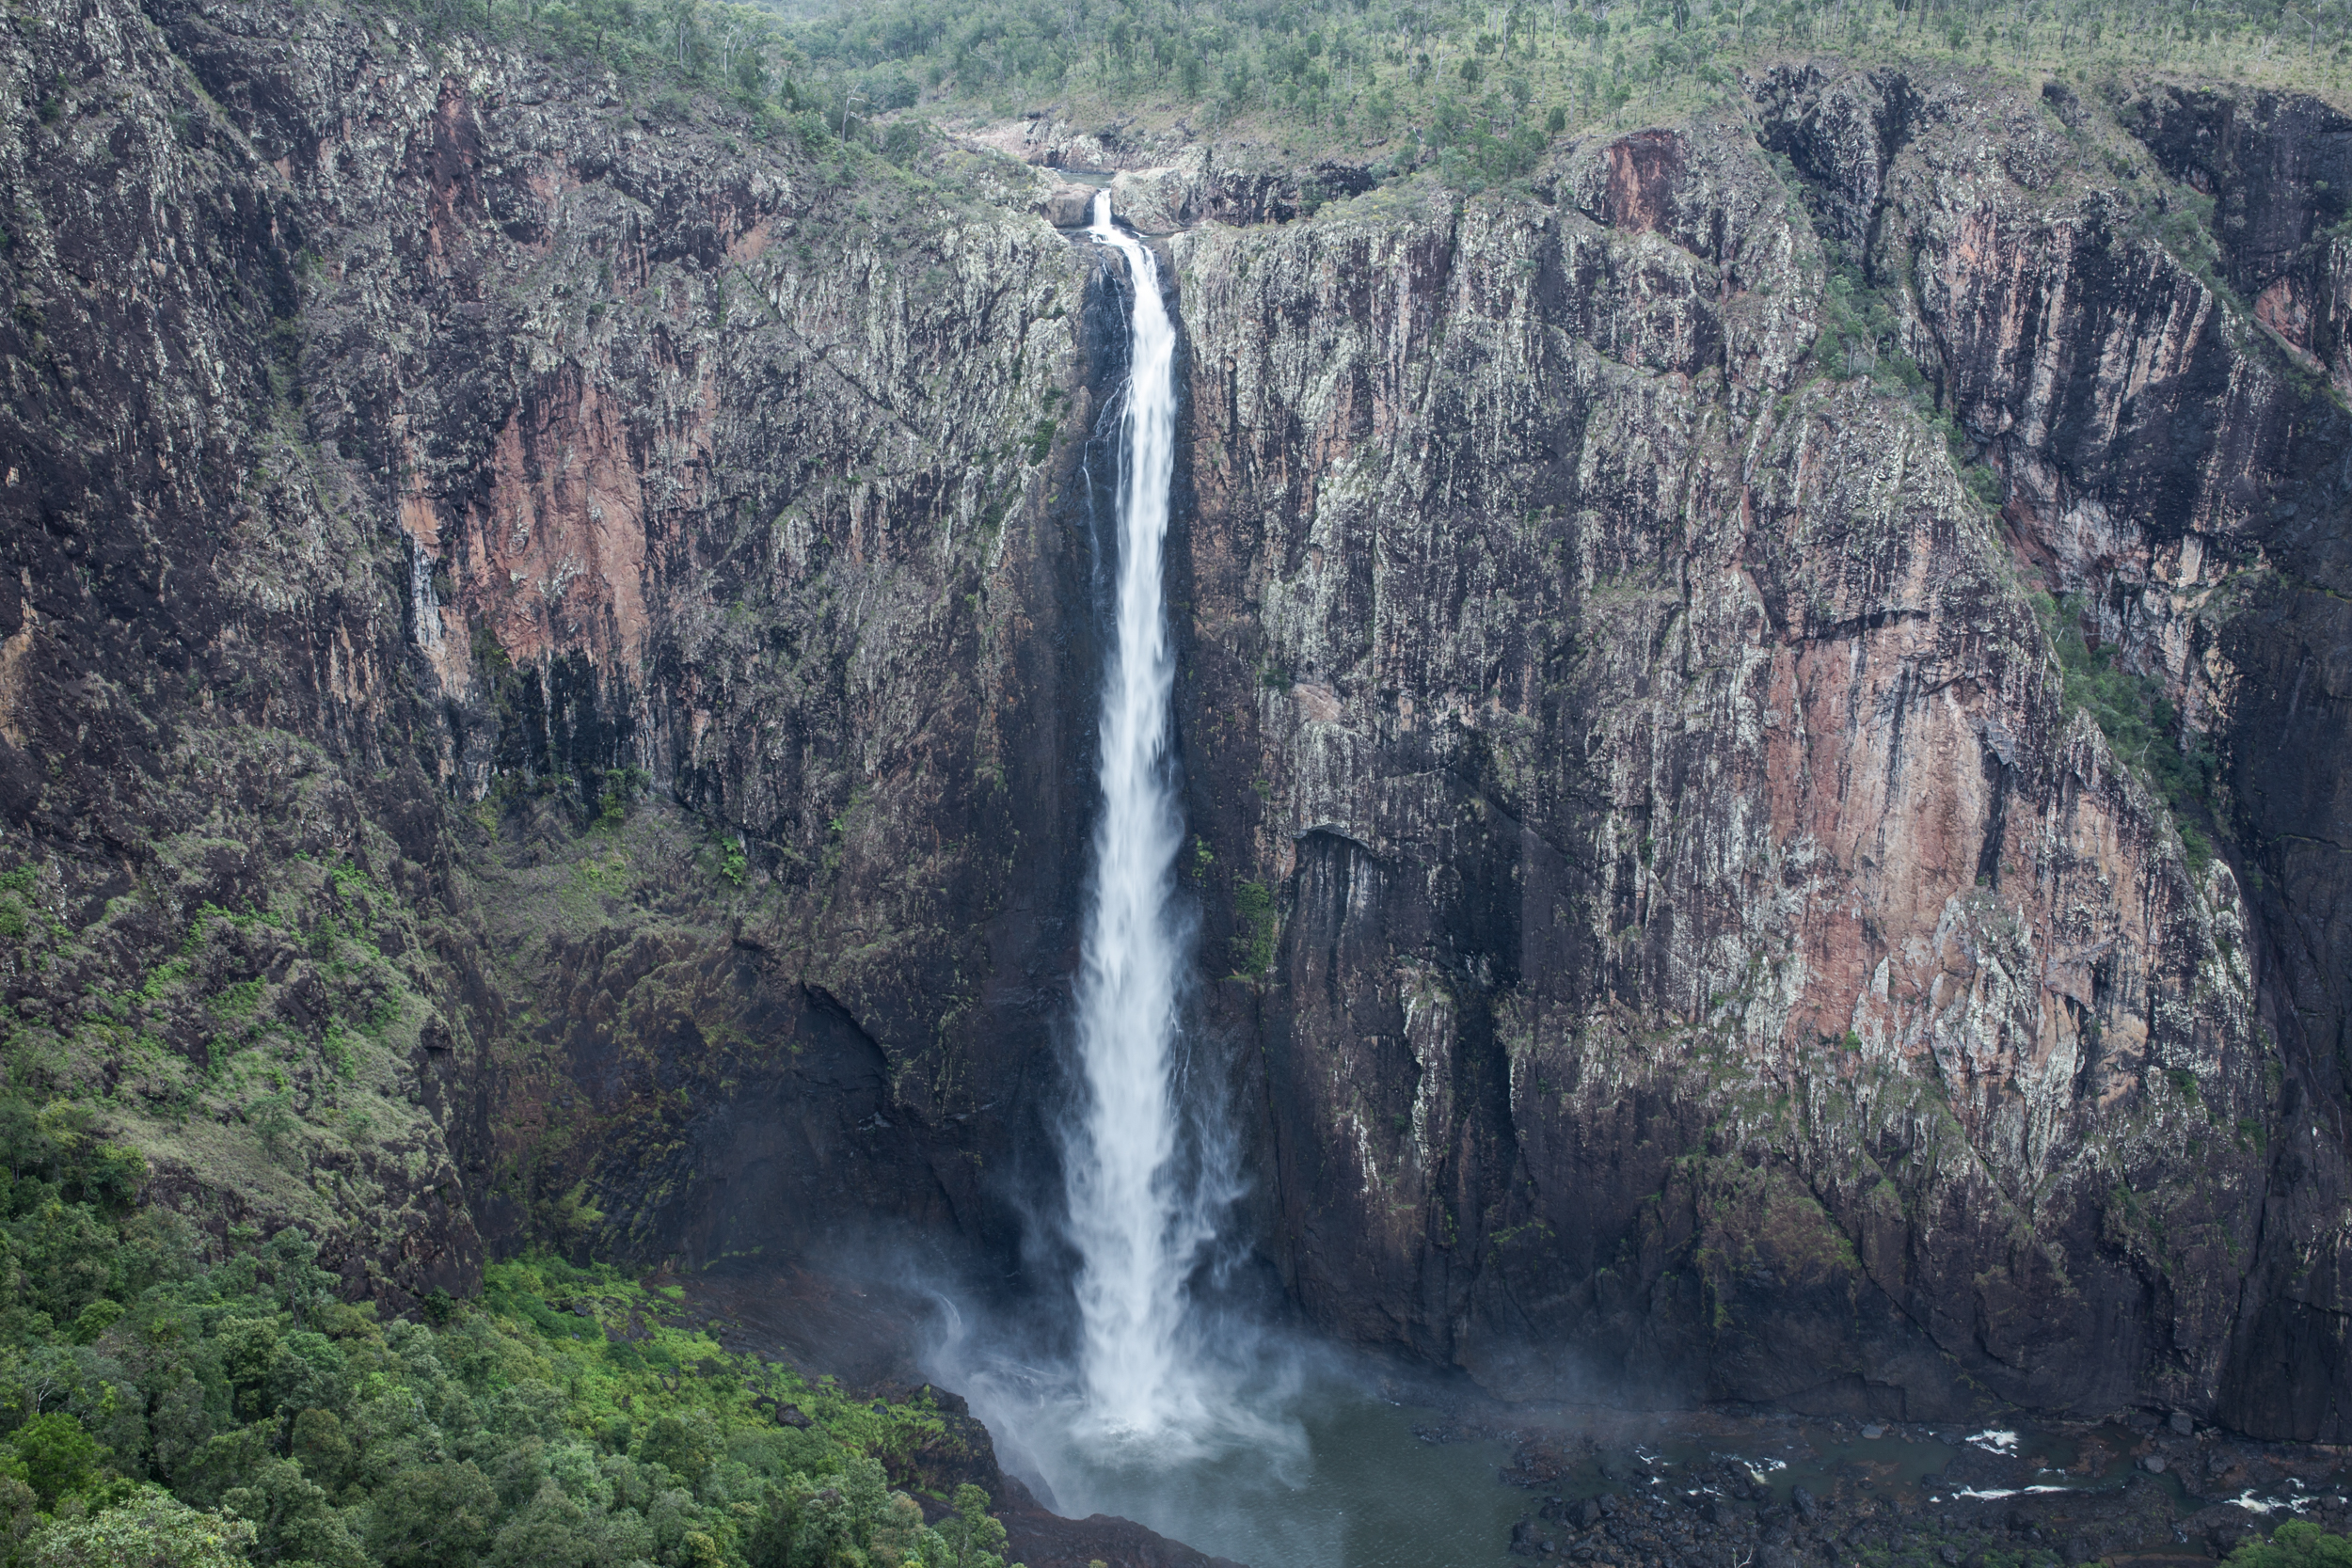 Wallaman Falls in Queensland, Australia